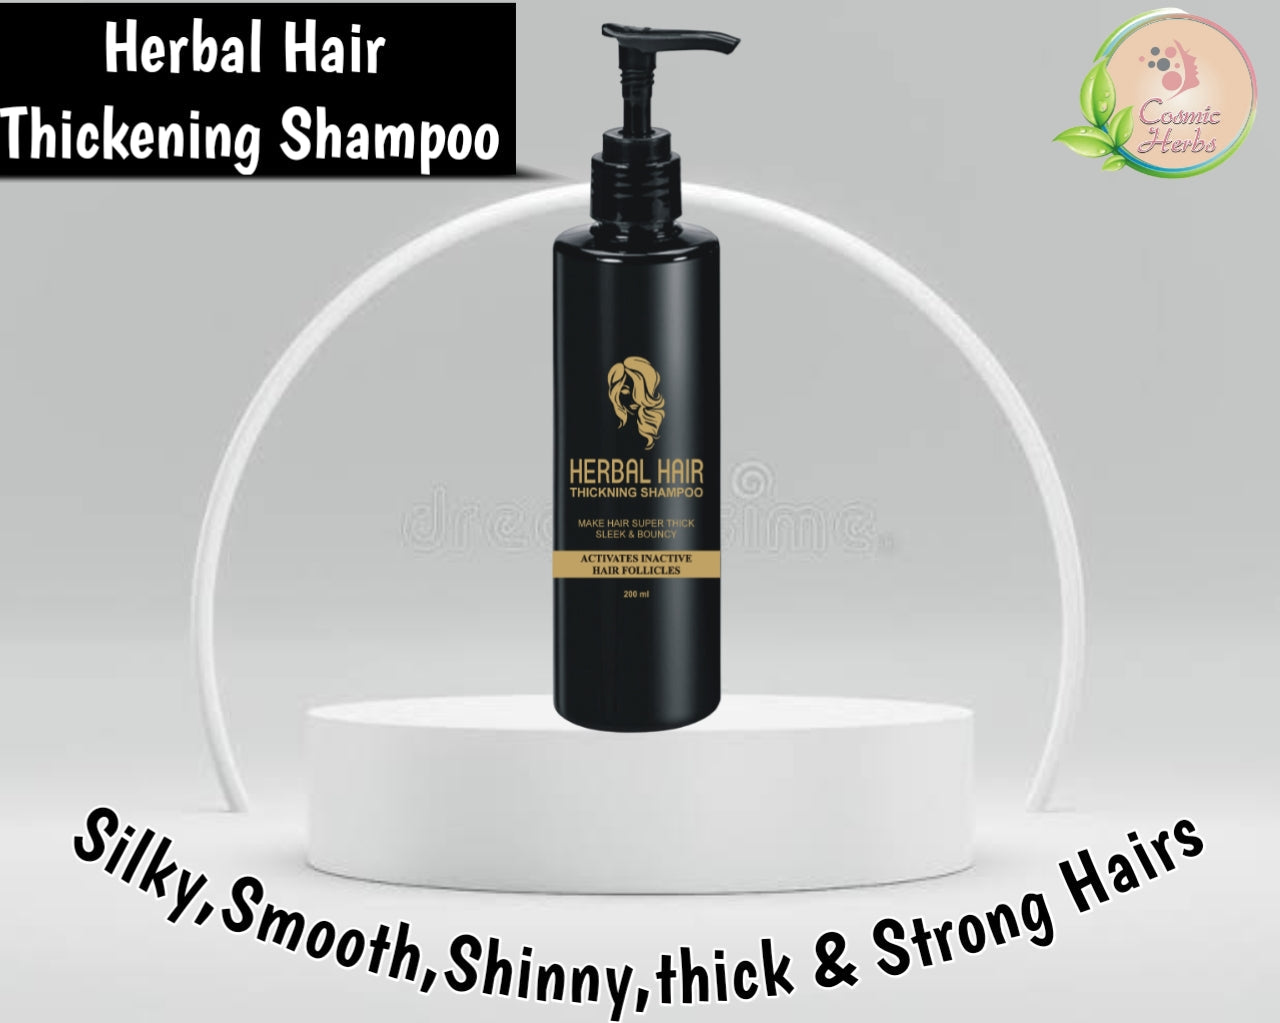 Herbal Hair Thickening Shampoo Image